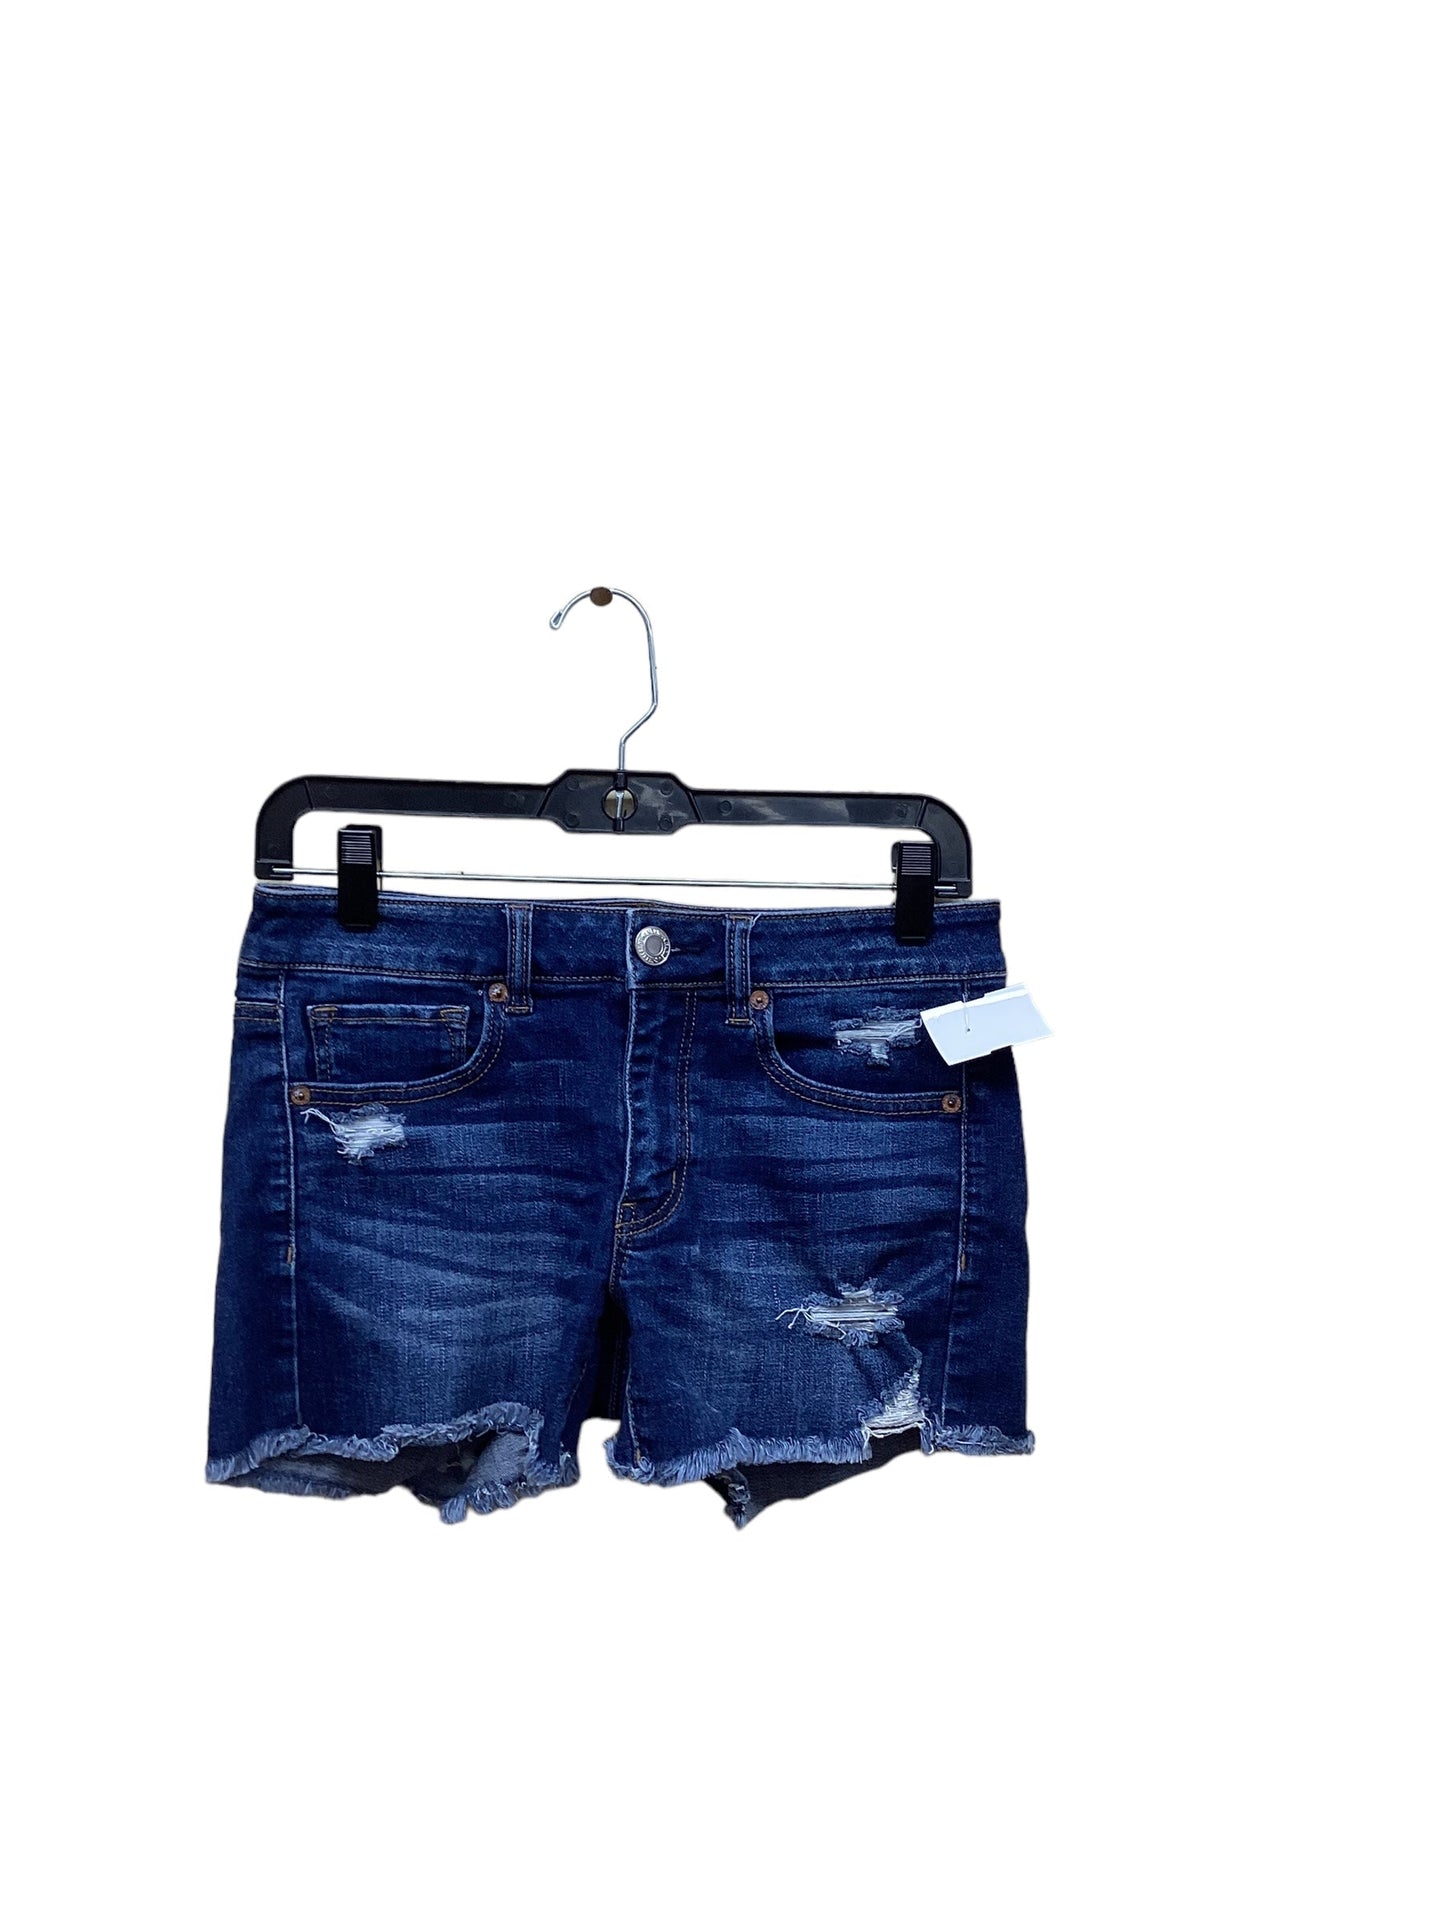 Blue Denim Shorts American Eagle, Size 4